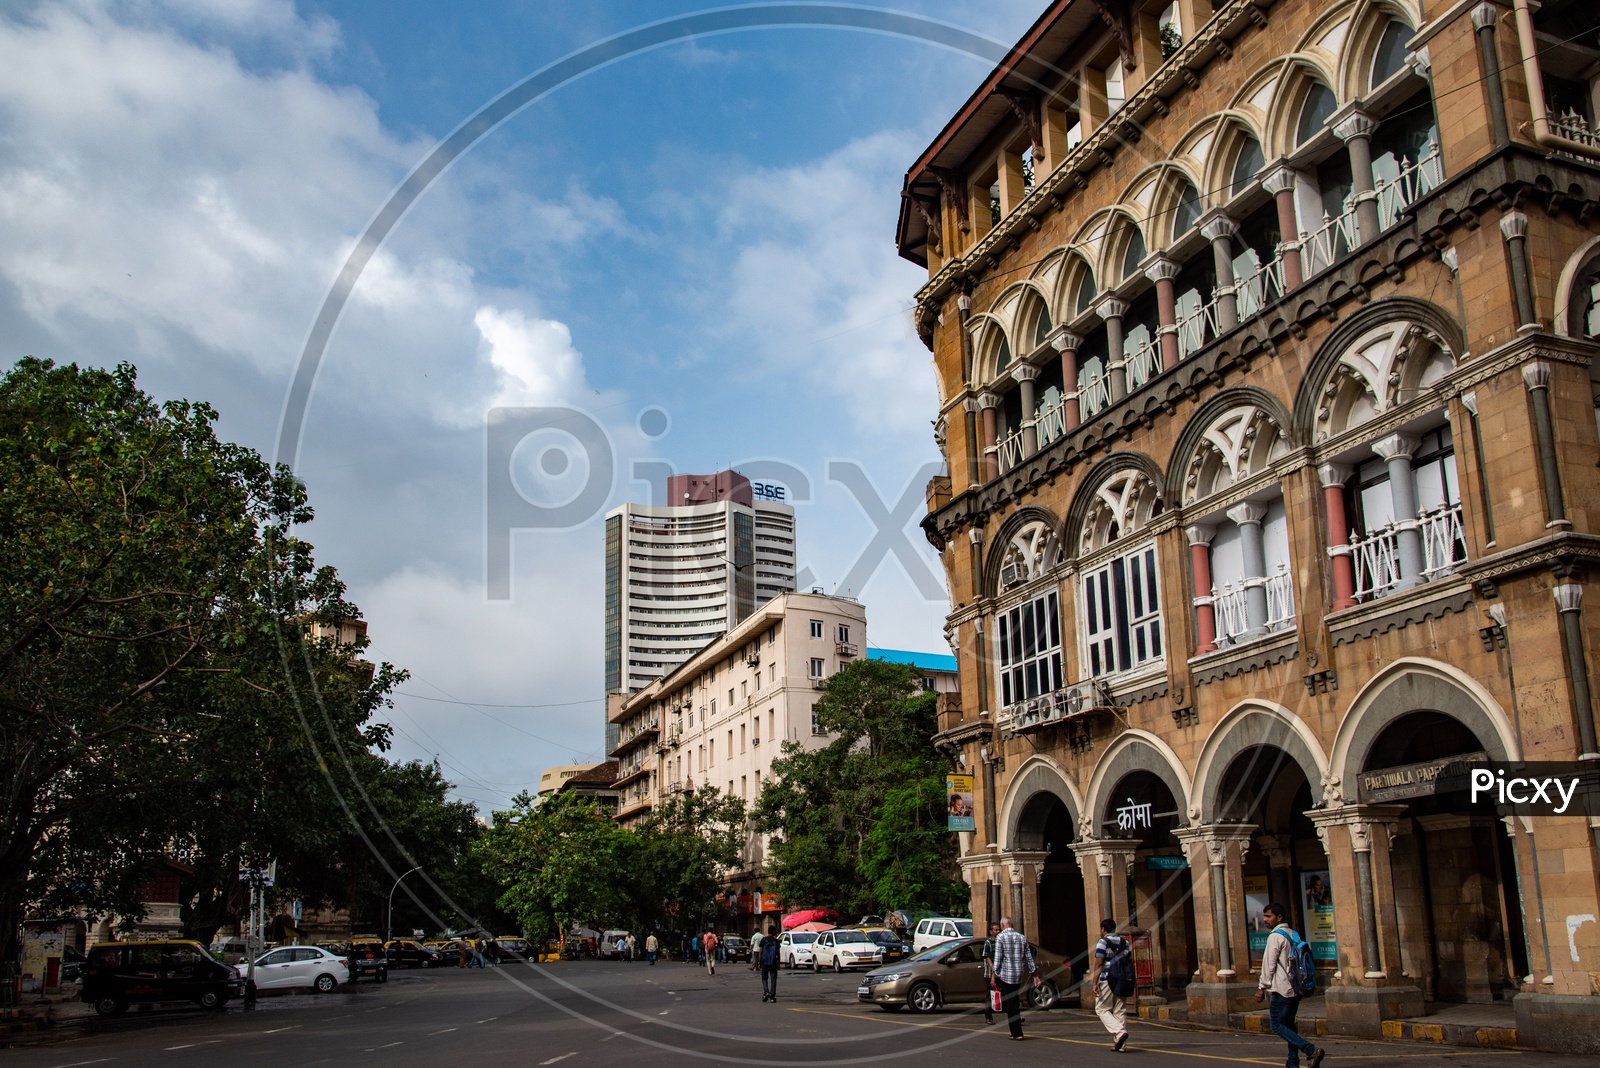 BSE Building / Bombay Stock Exchange